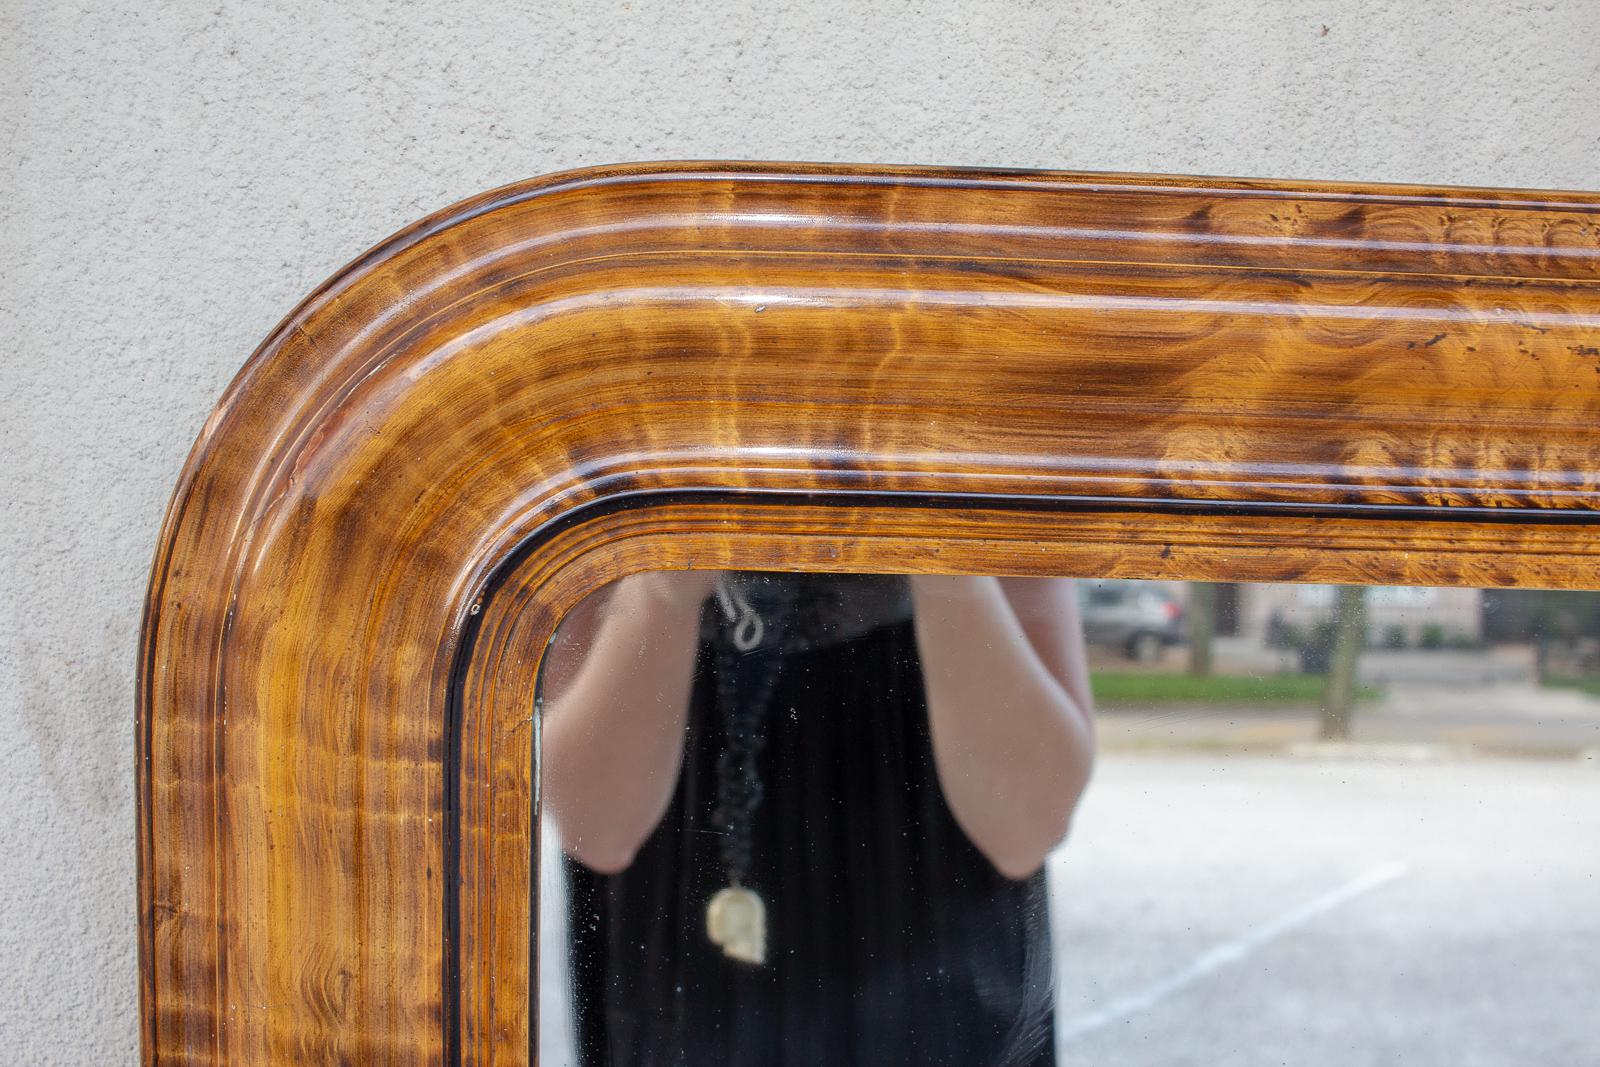 burl wood mirror